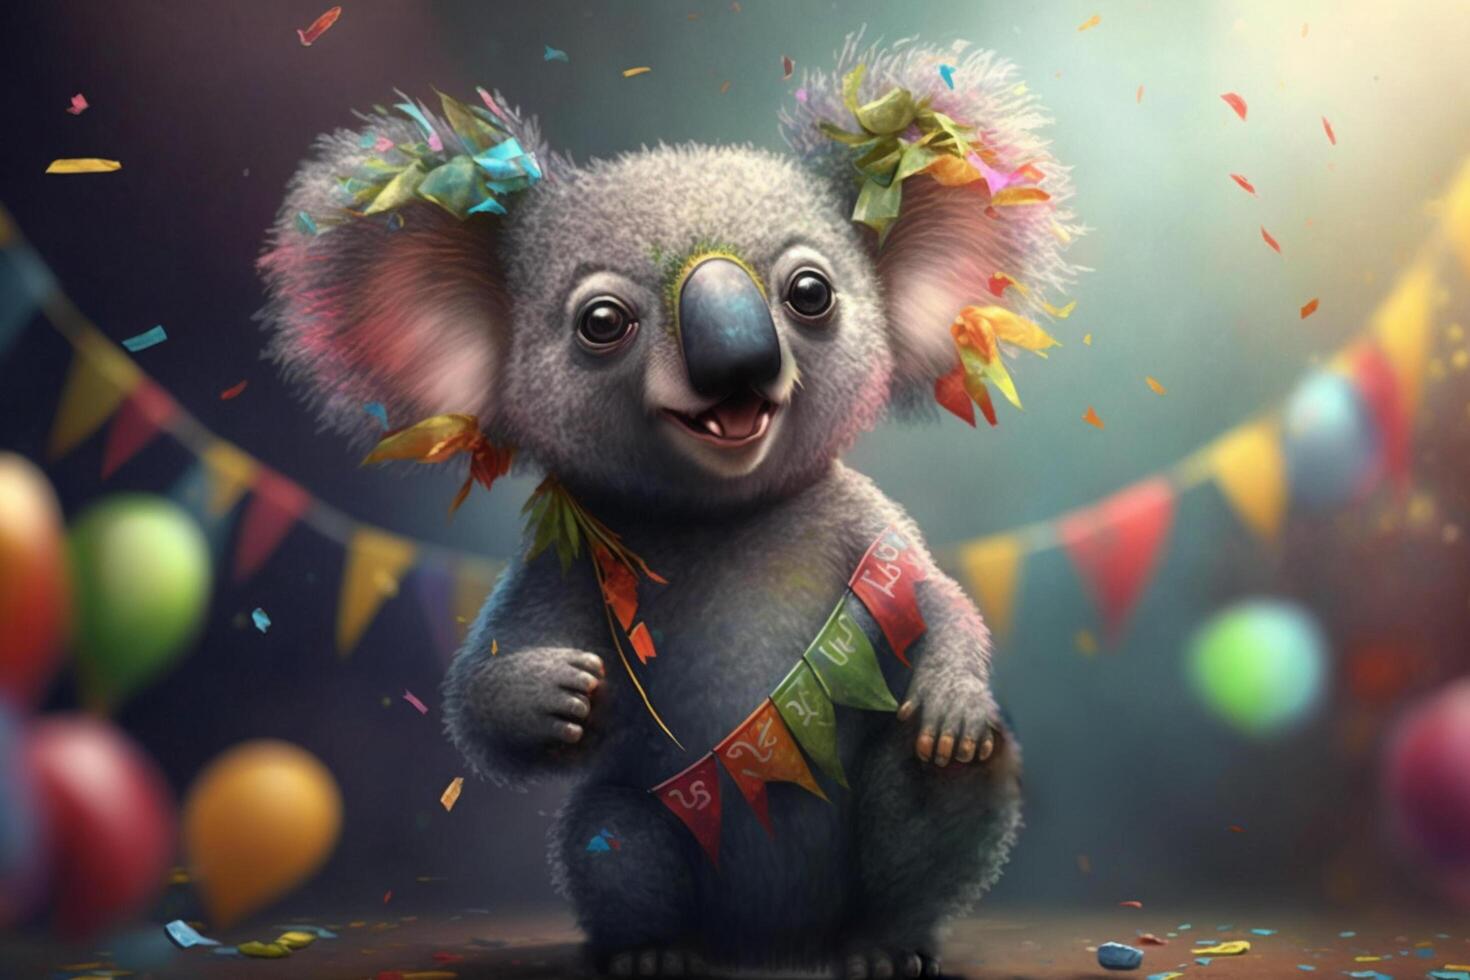 Koala celebrates birthday party birthday card Content photo